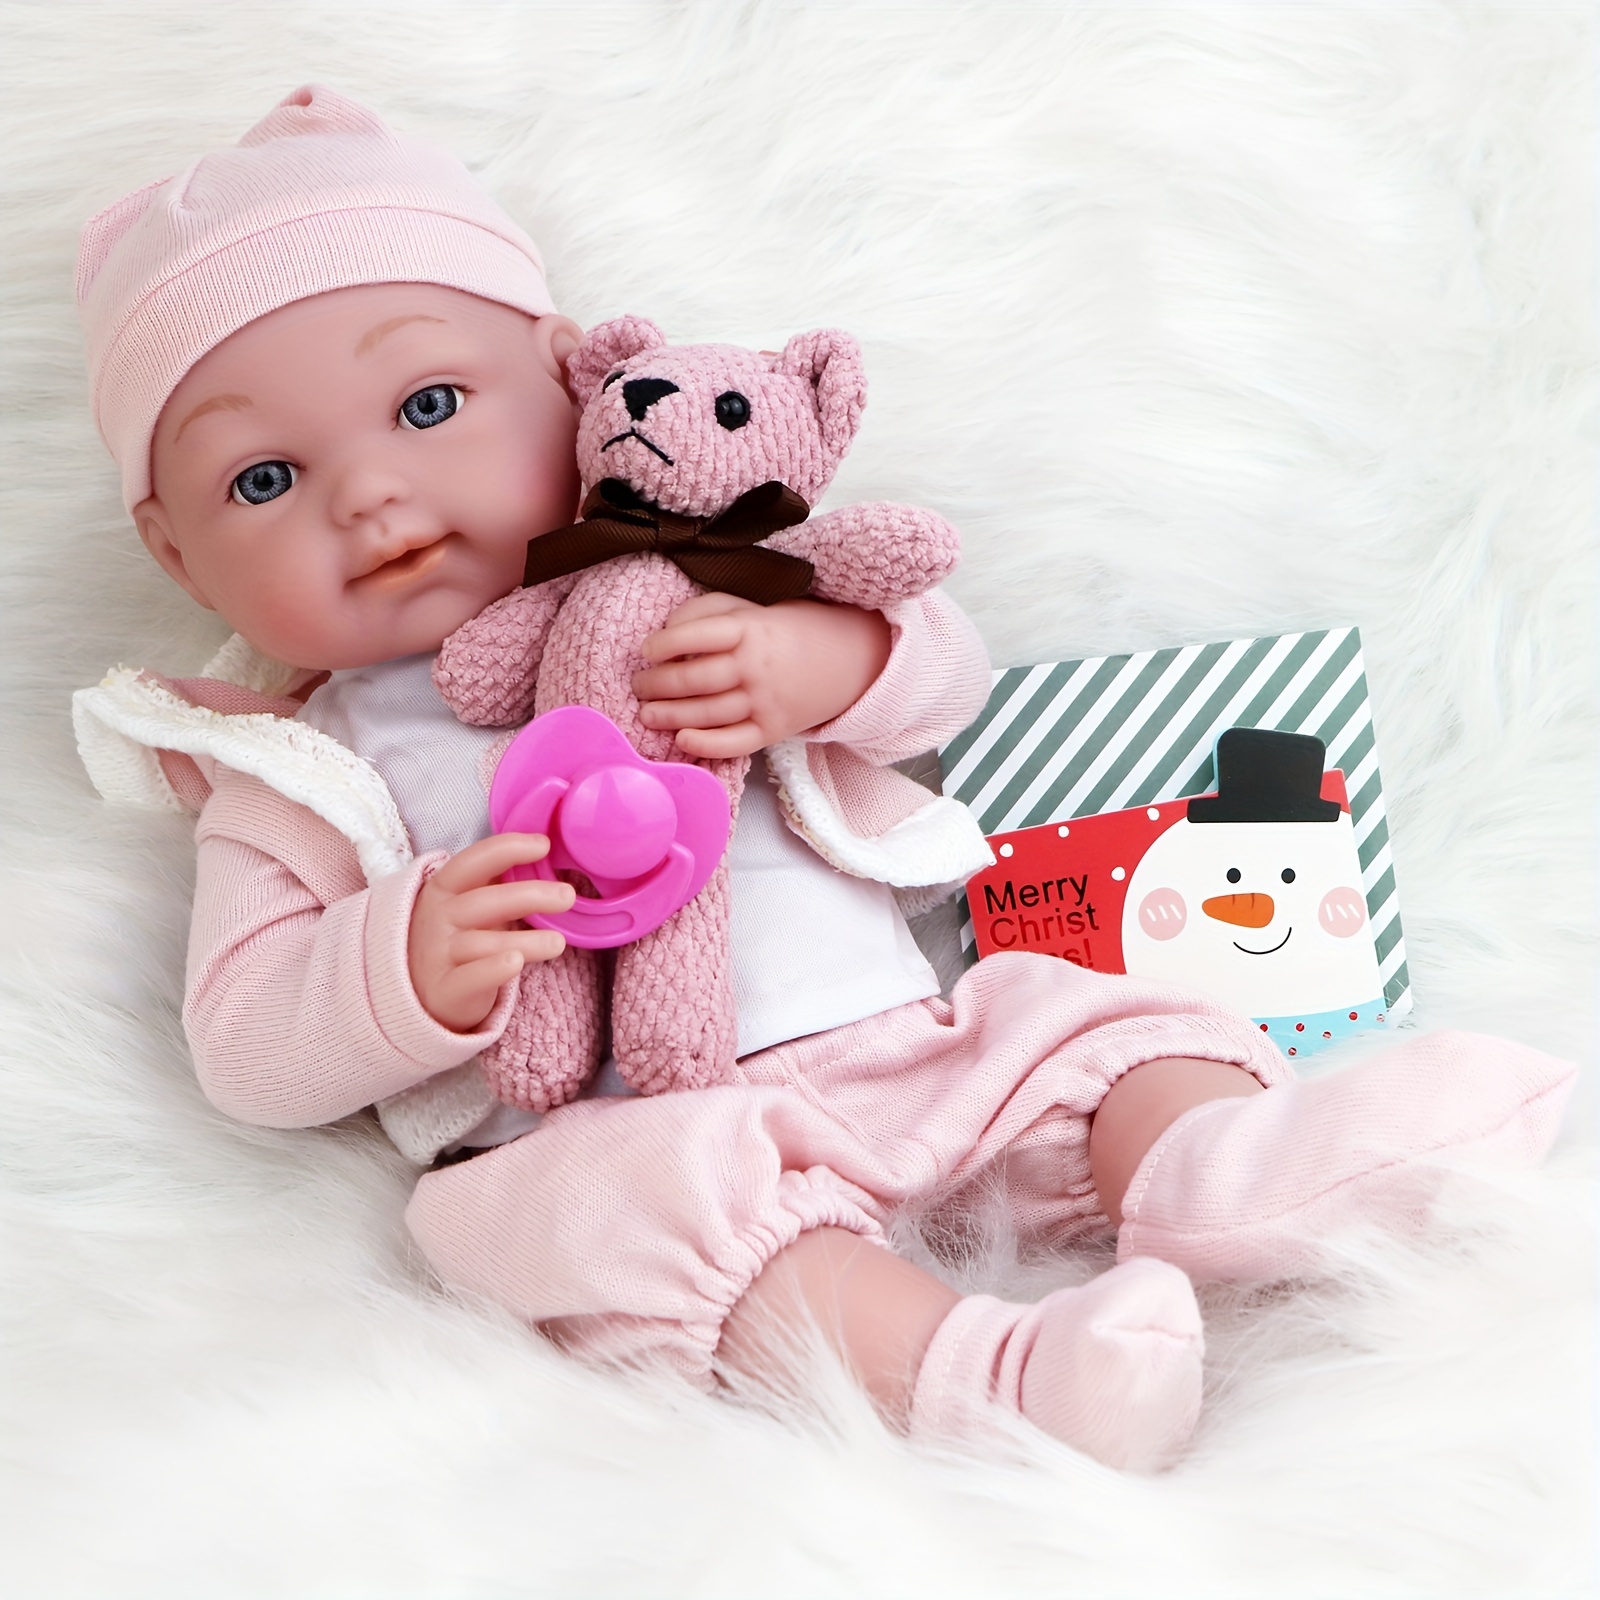 Reborn Baby Dolls - 43.18 Cm Realistic Newborn Soft Vinyl Baby Dolls Toy  For Kids